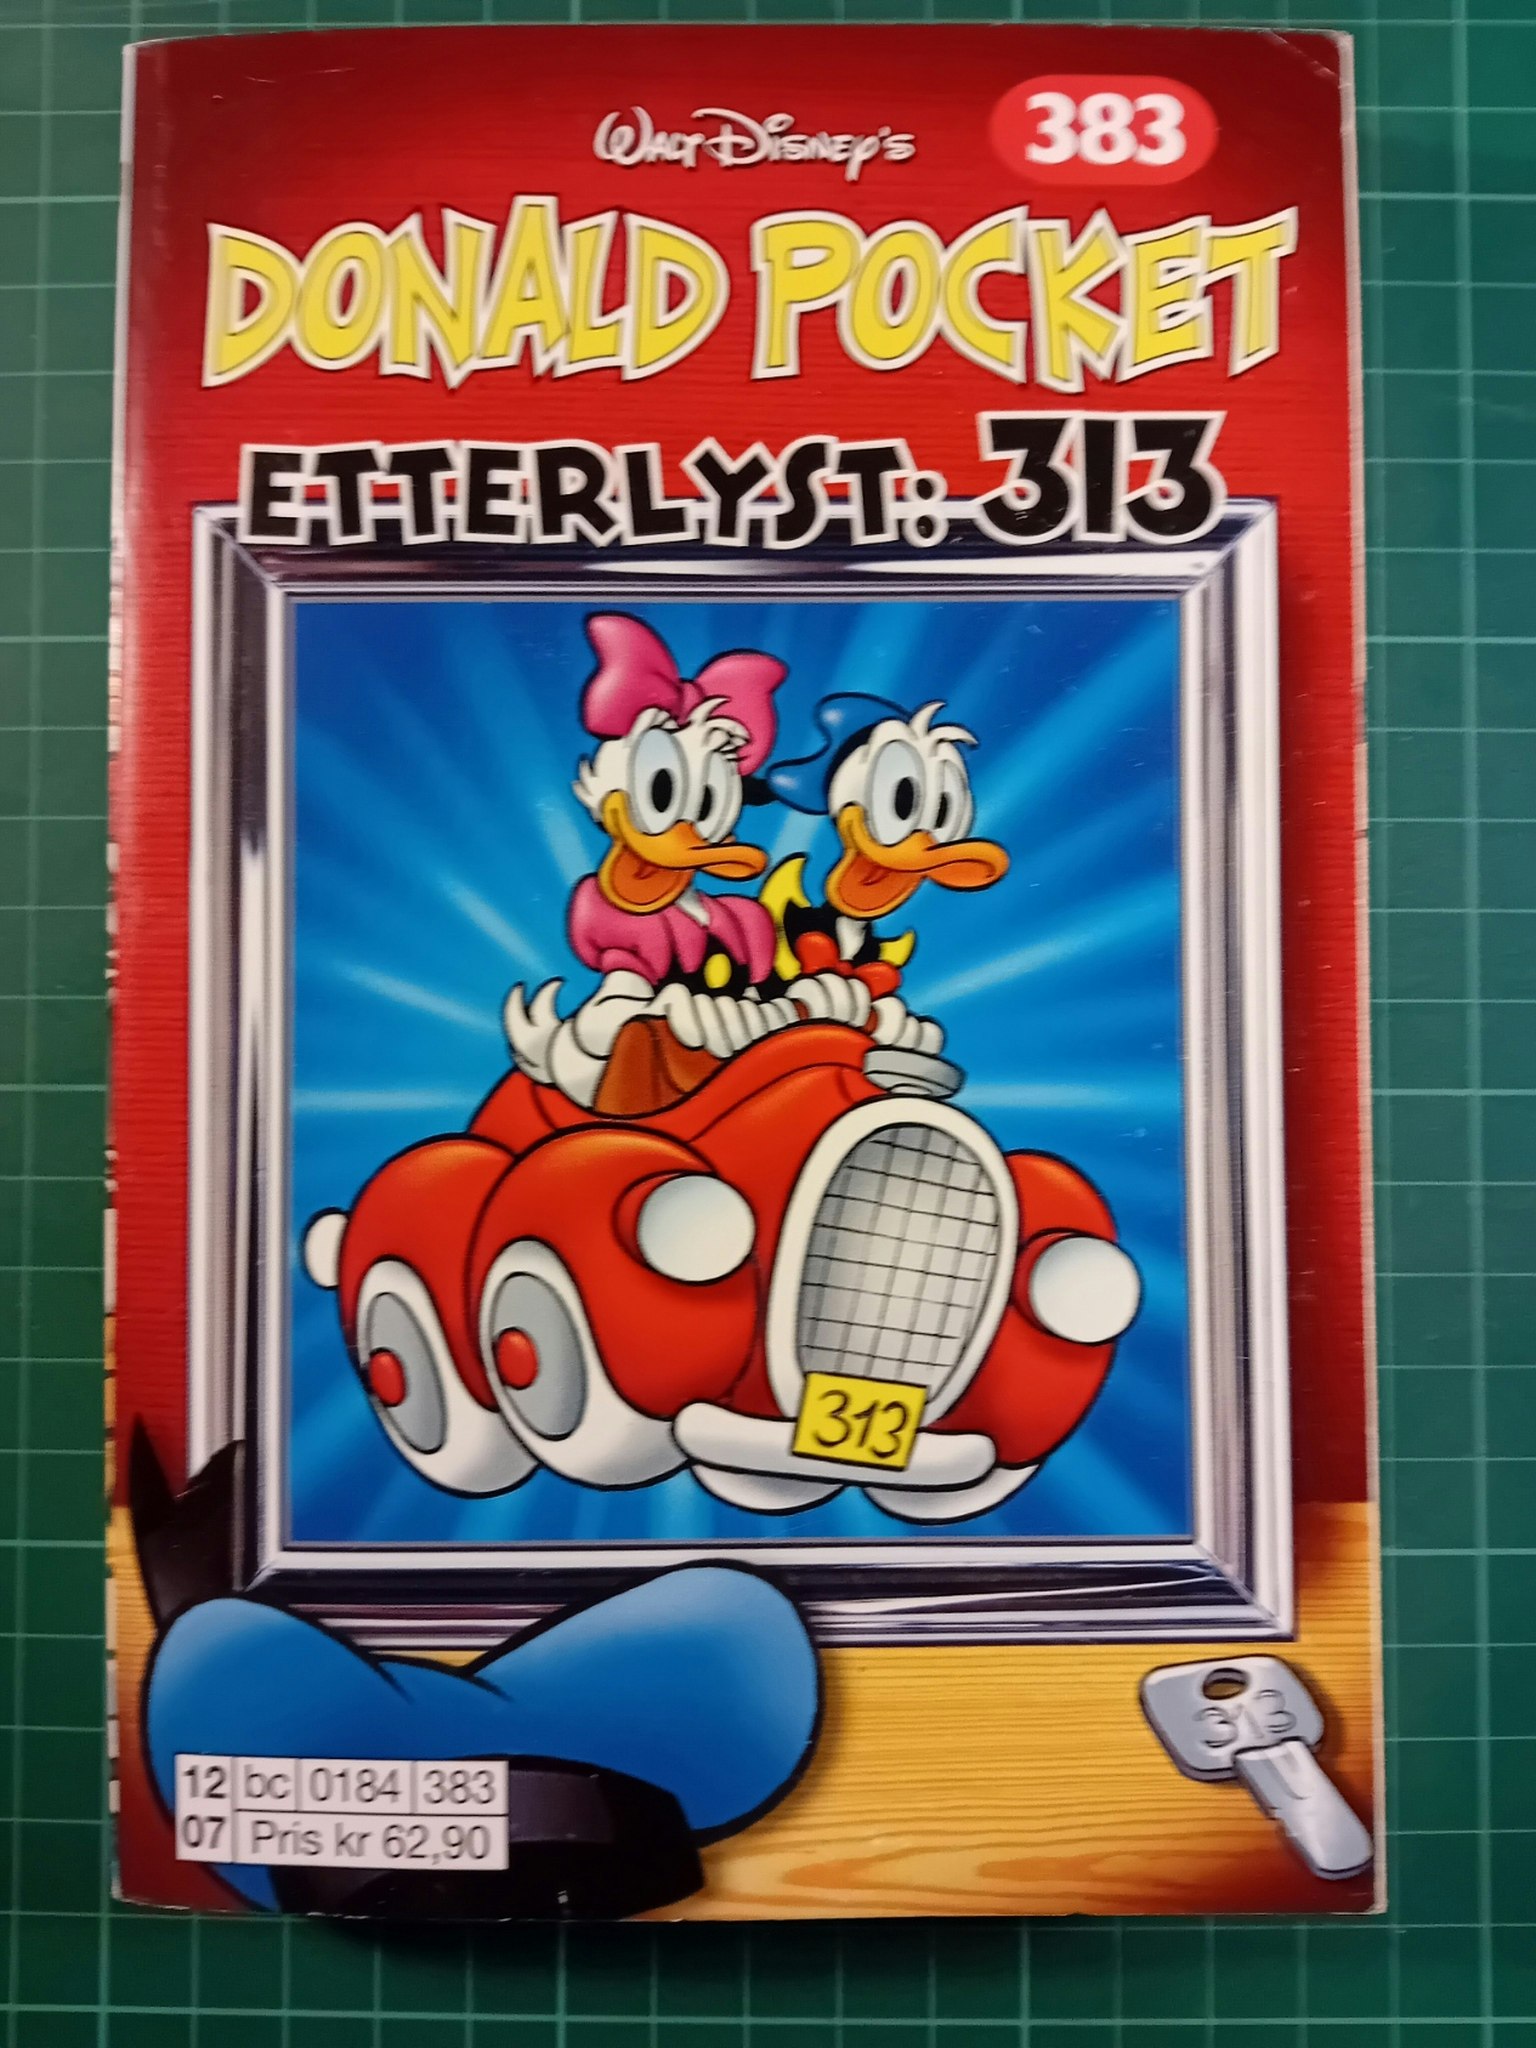 Donald Pocket 383